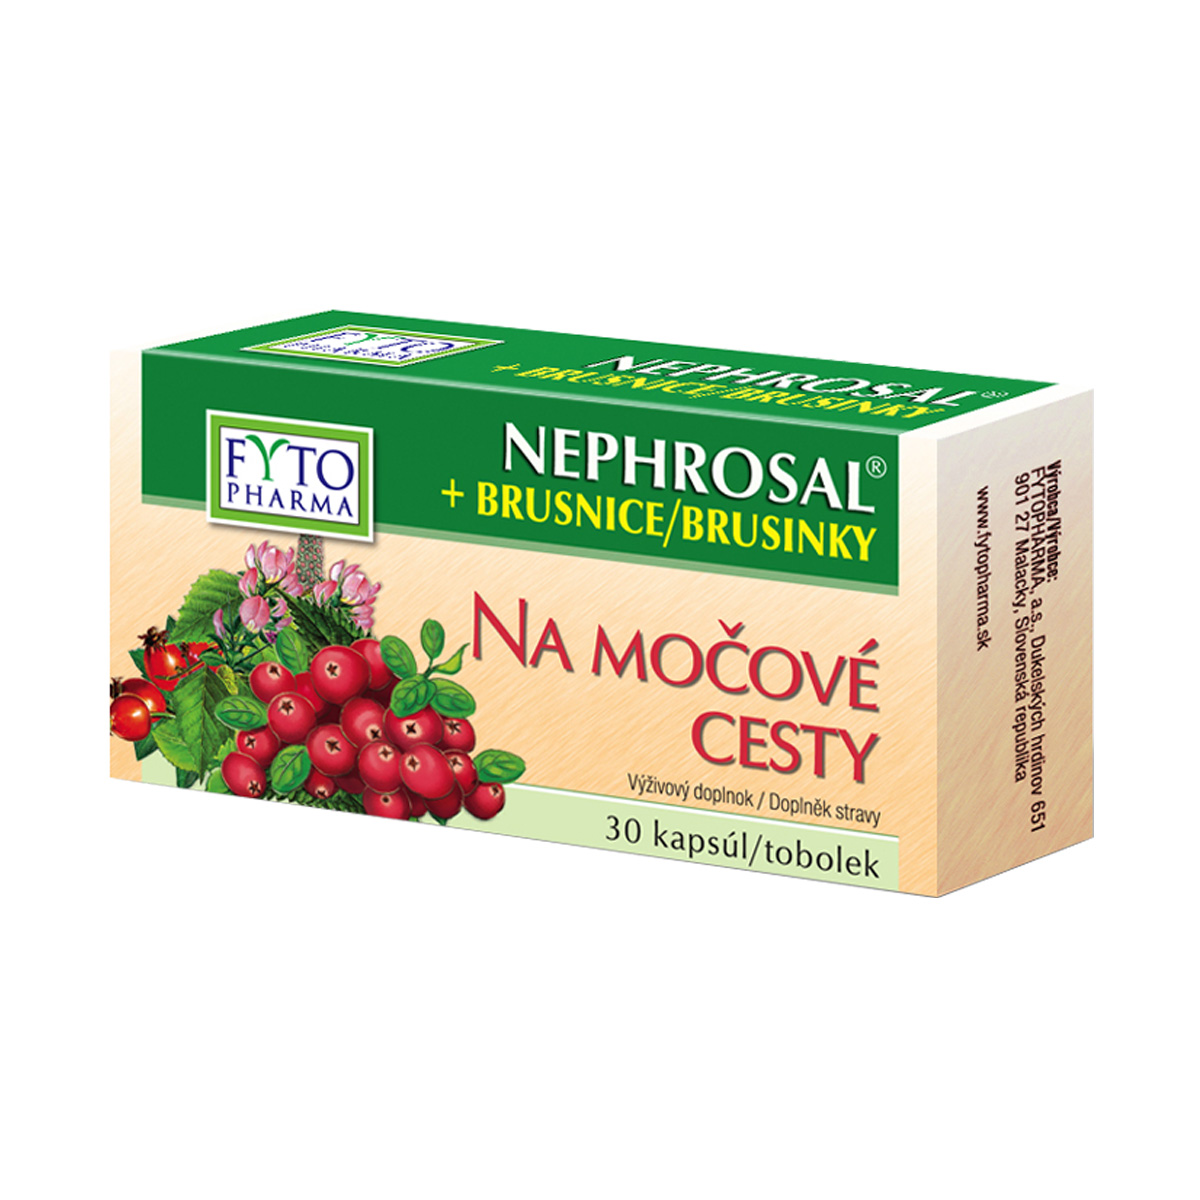 Fytopharma NEPHROSAL®+ brusinky tobolky na močové cesty 30 cps